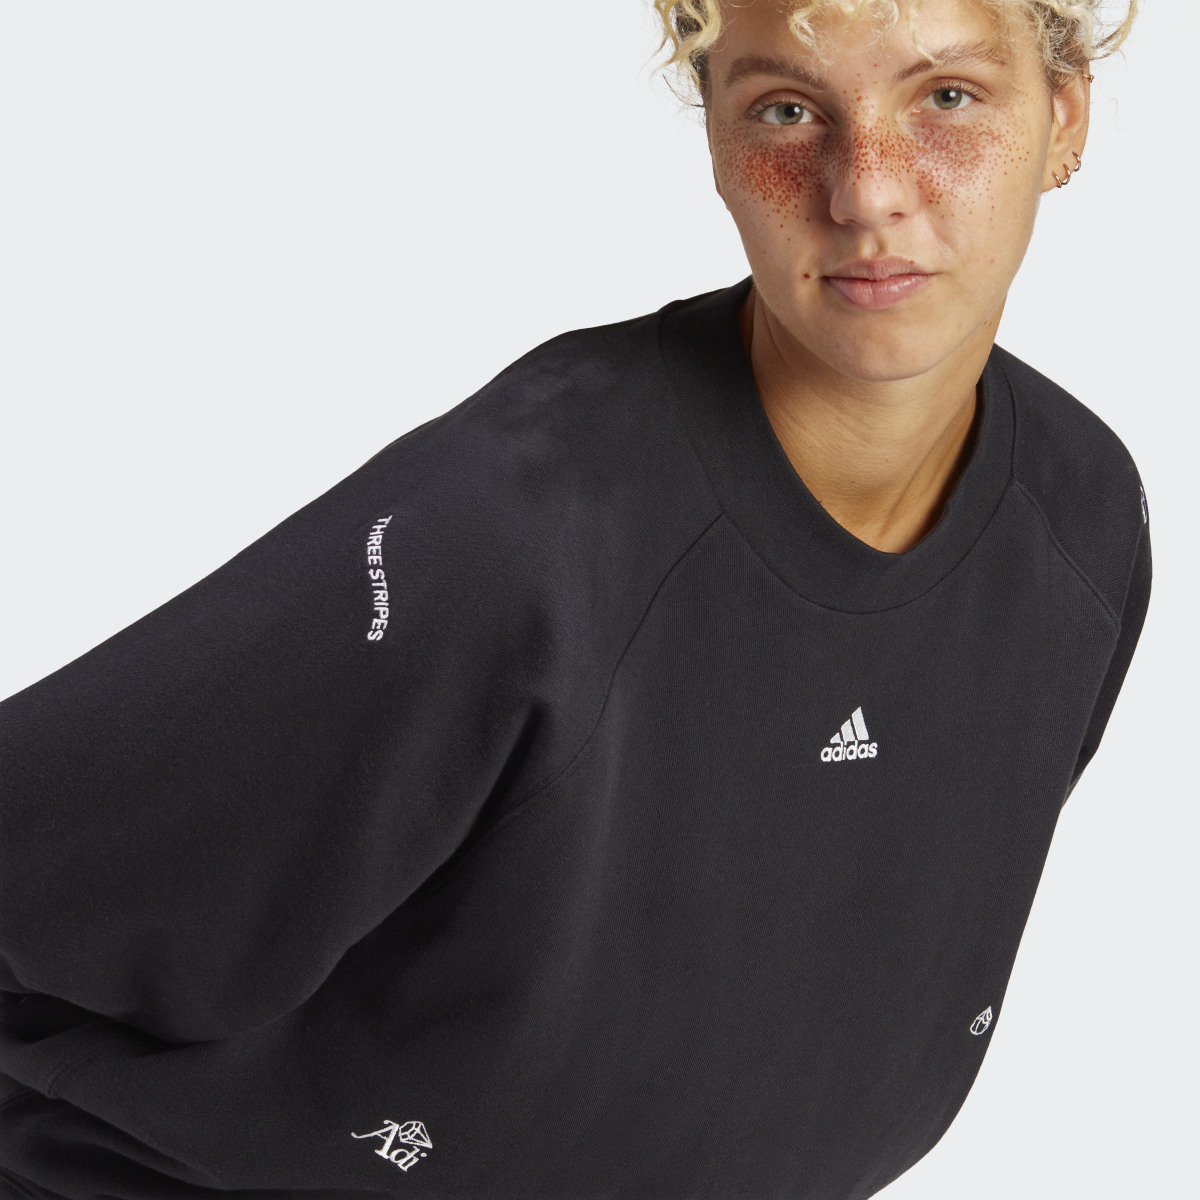 Adidas Oversized Crewneck Sweatshirt with Healing Crystal-Inspired Graphics. 6